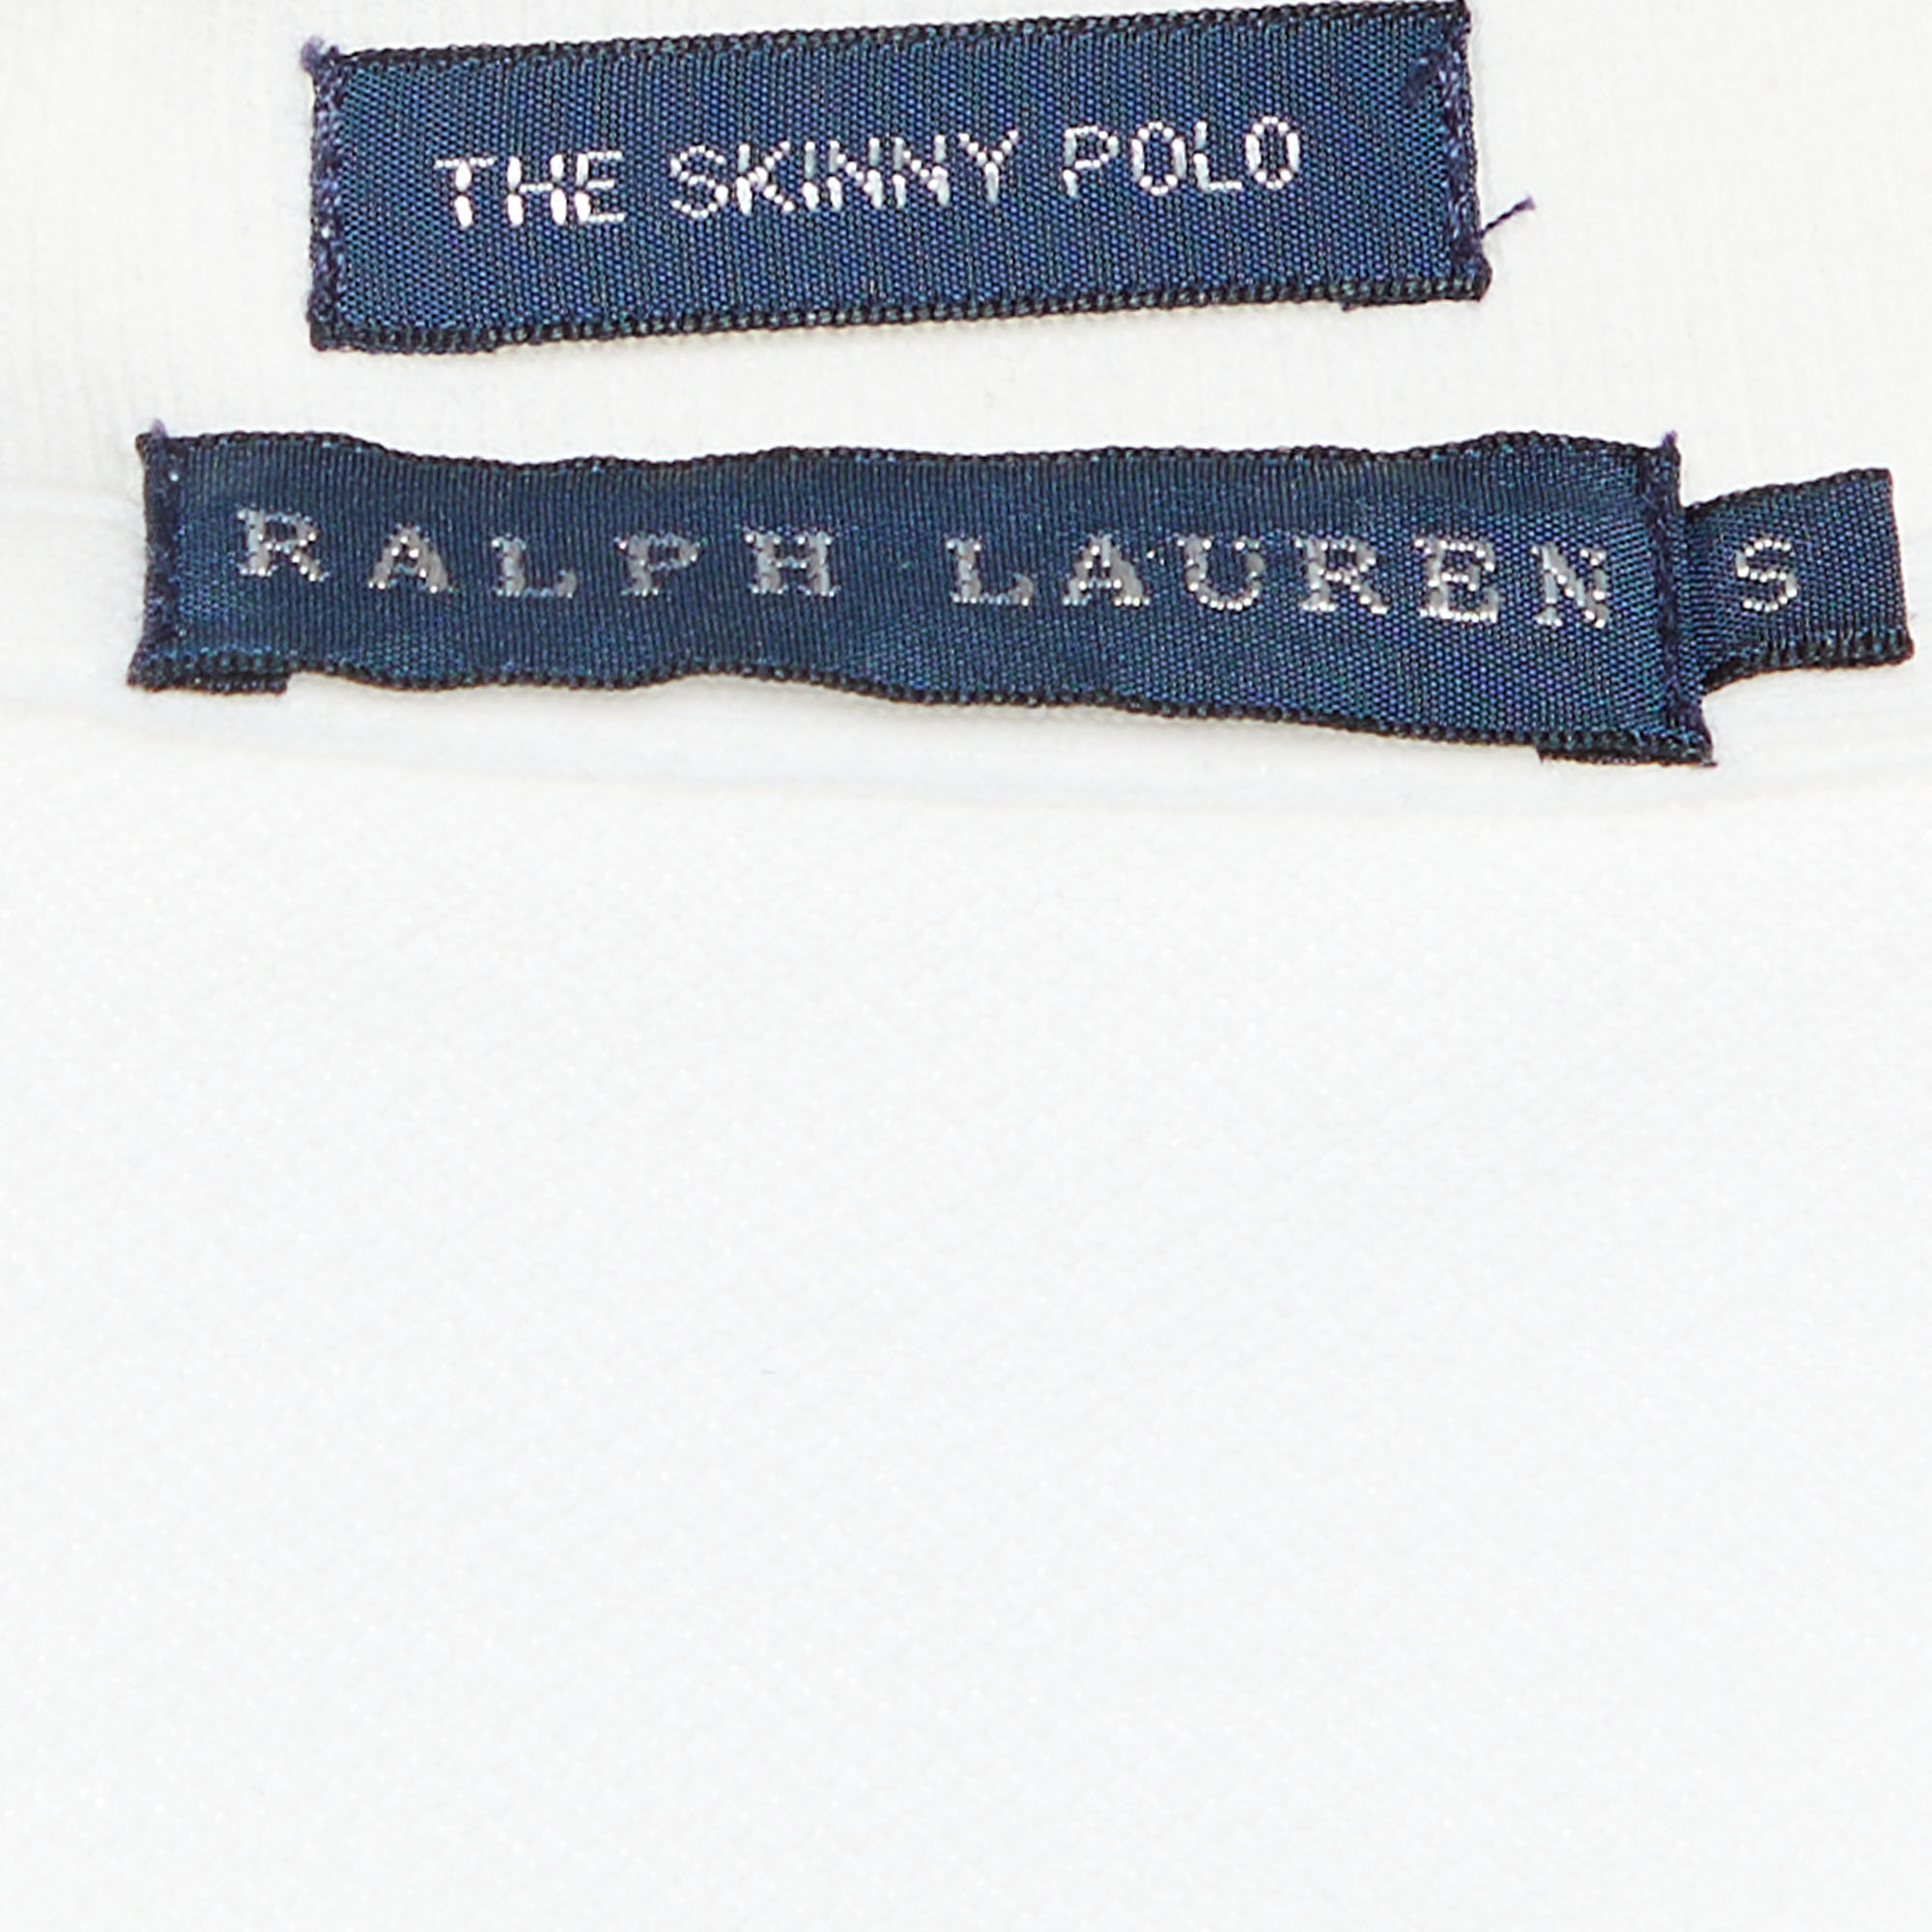 Ralph Lauren White Cotton Pique The Skinny Polo T-Shirt S